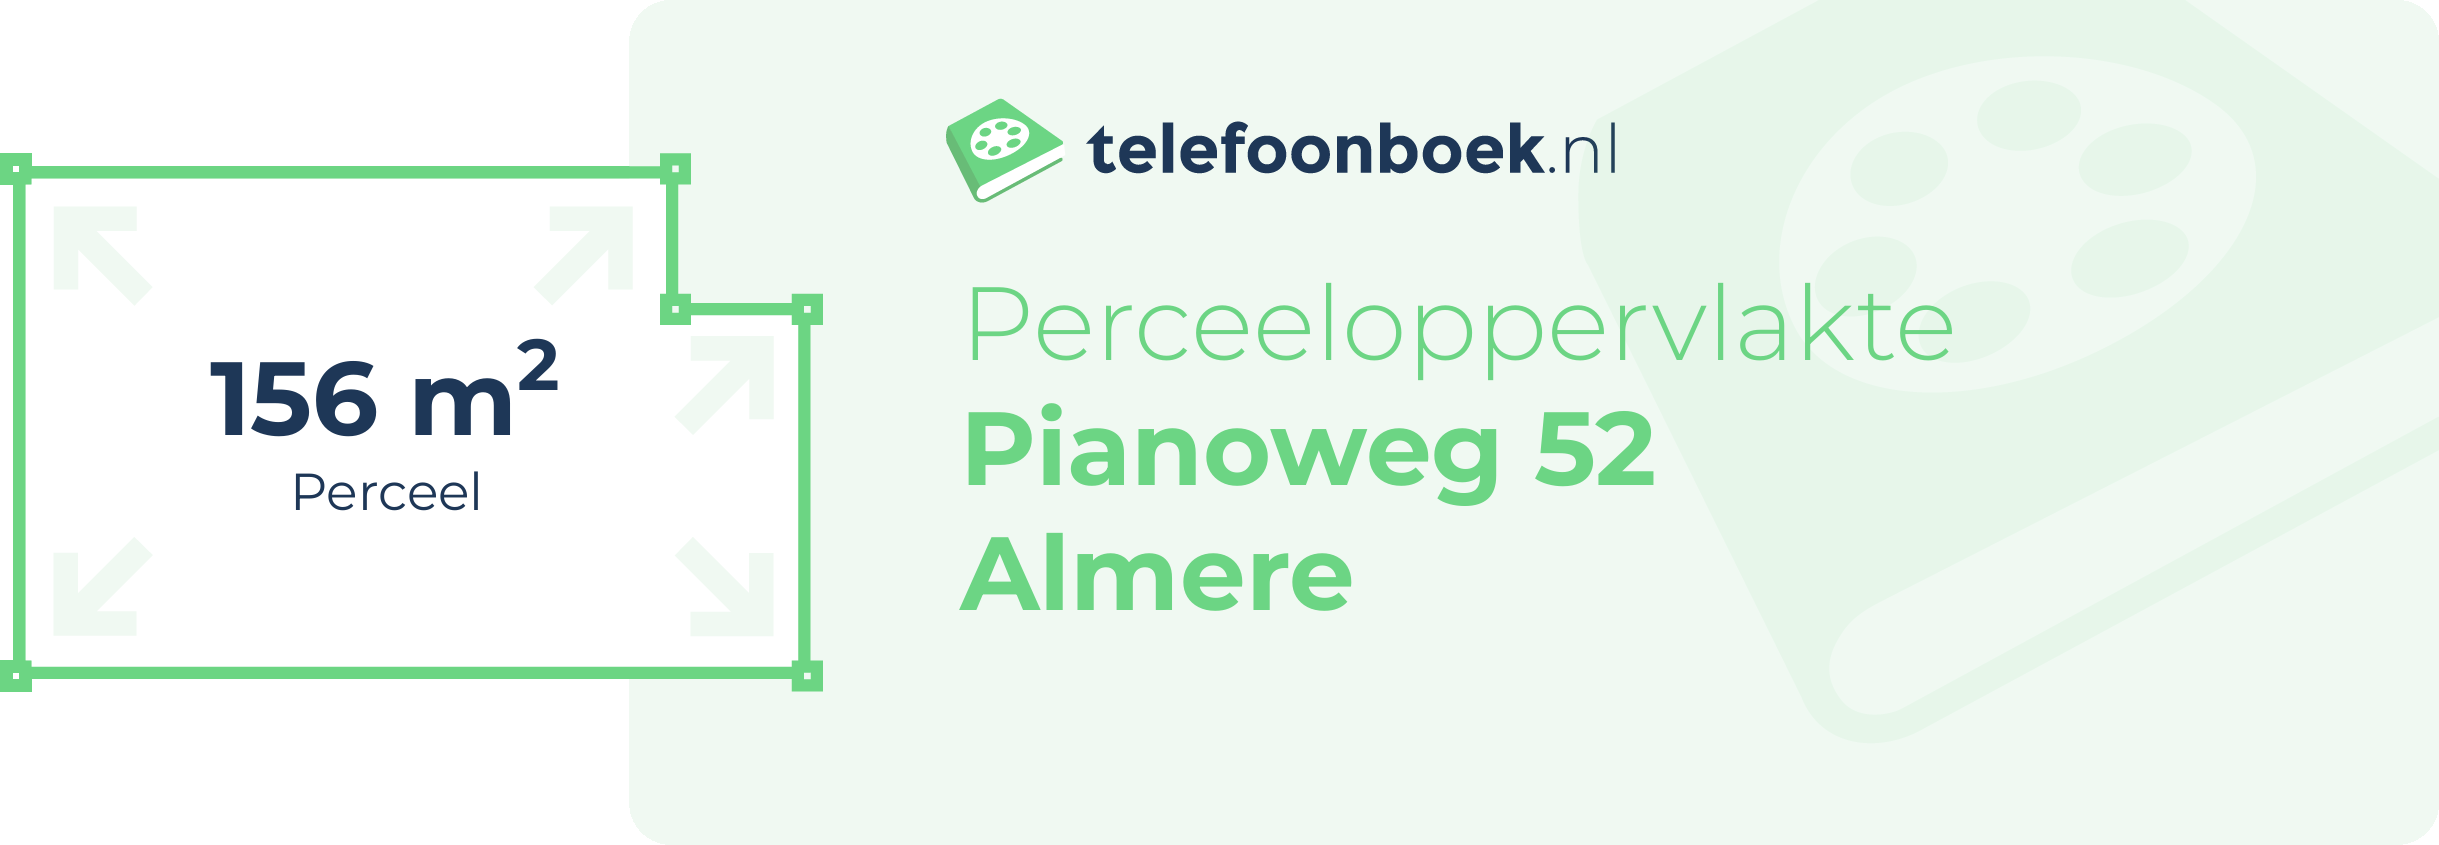 Perceeloppervlakte Pianoweg 52 Almere